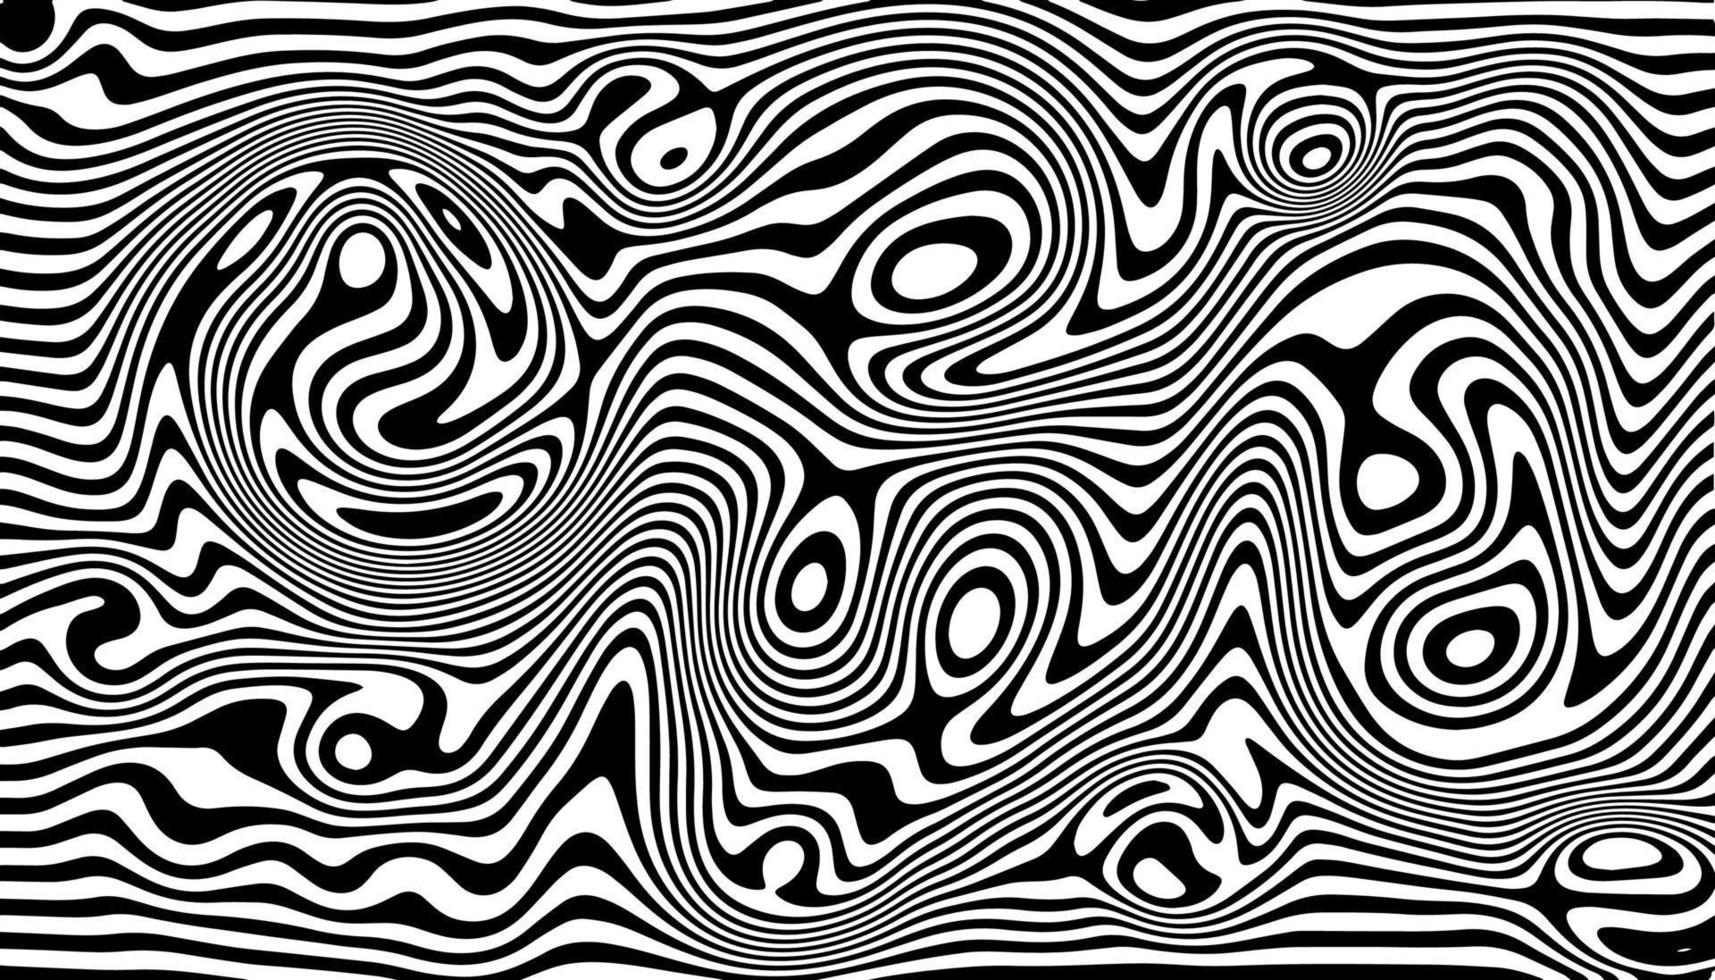 abstrakt sicksack linjer våg bakgrund vektor